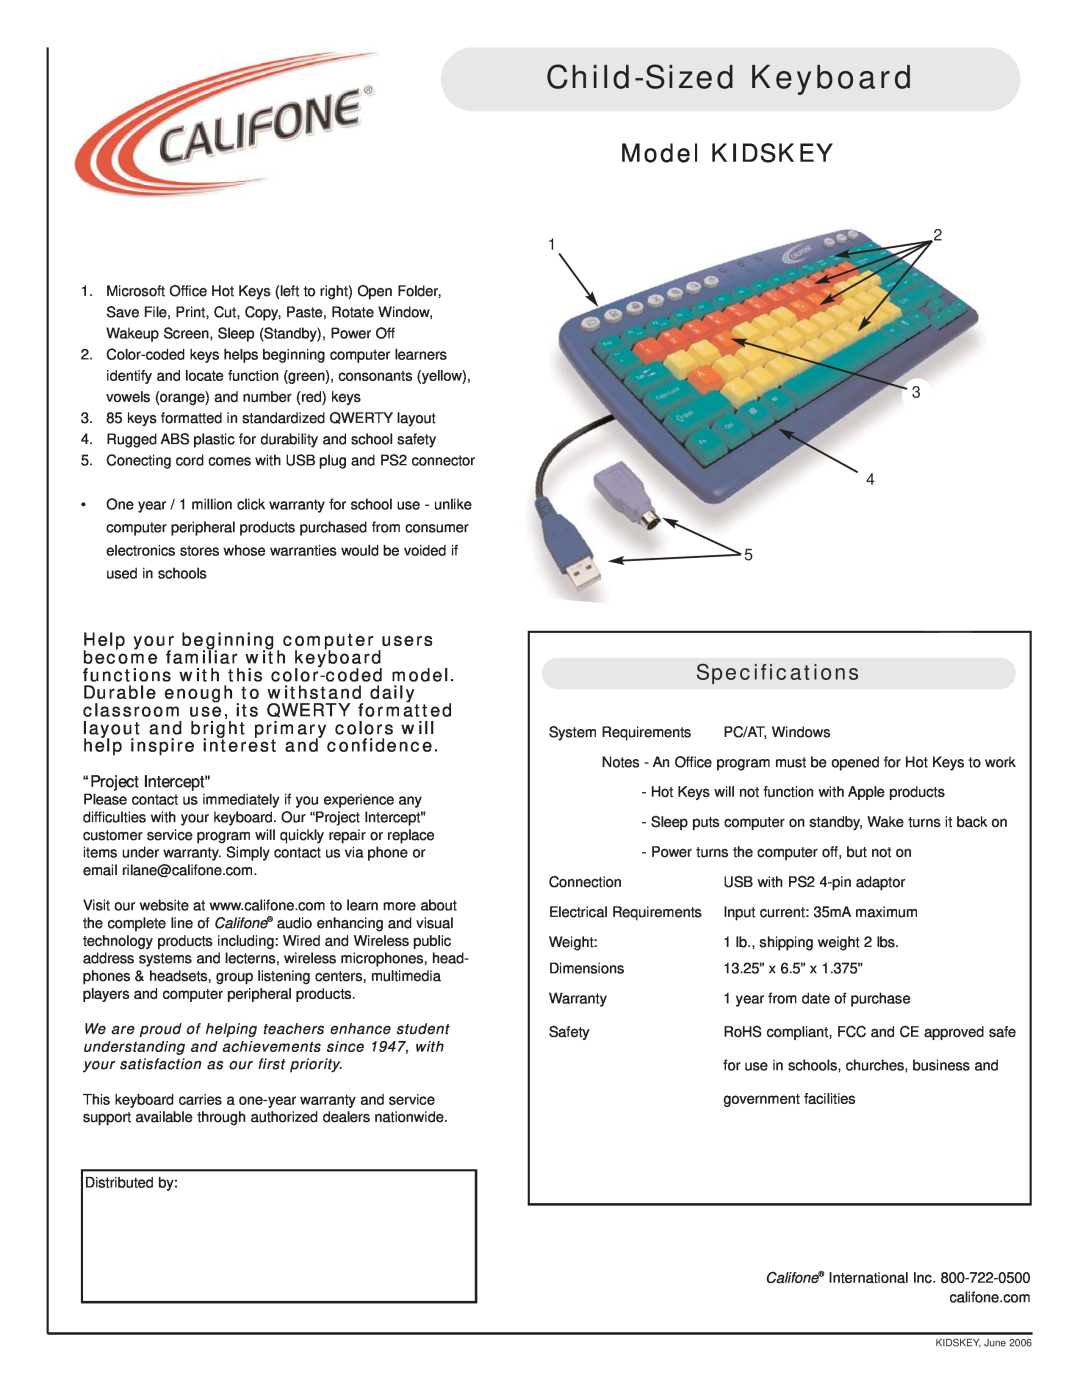 Califone specifications Child-Sized Keyboard, Model KIDSKEY, Specifications, “Project Intercept 